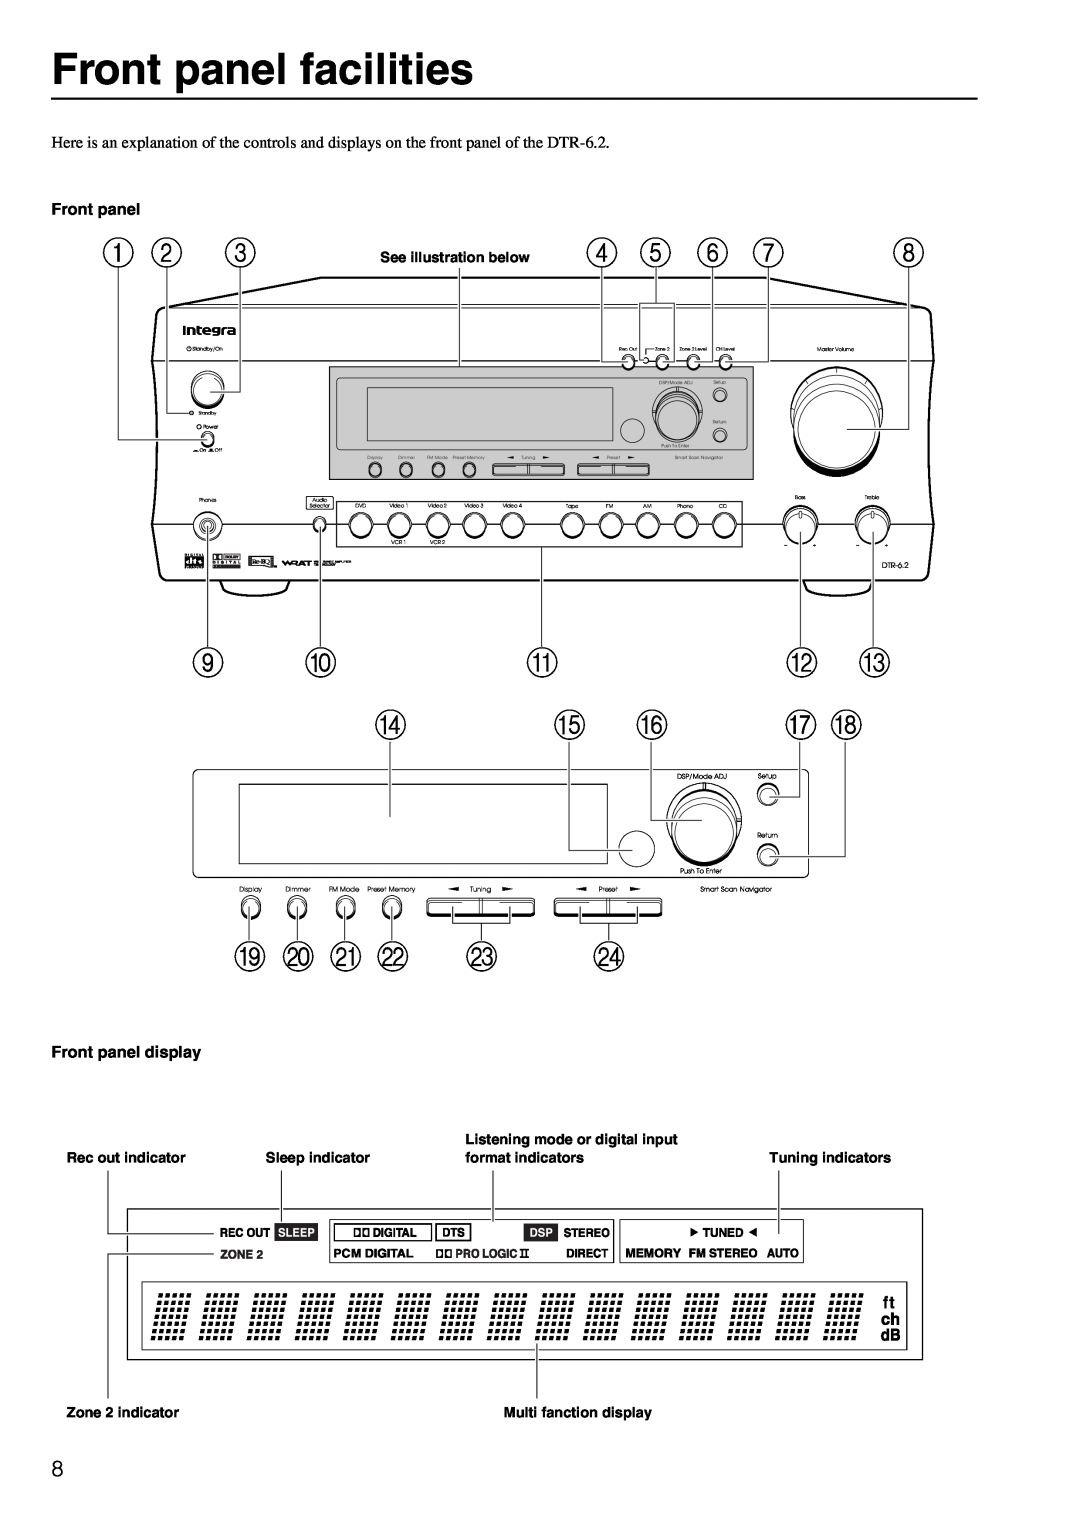 Integra DTR-6.2 instruction manual Front panel facilities 